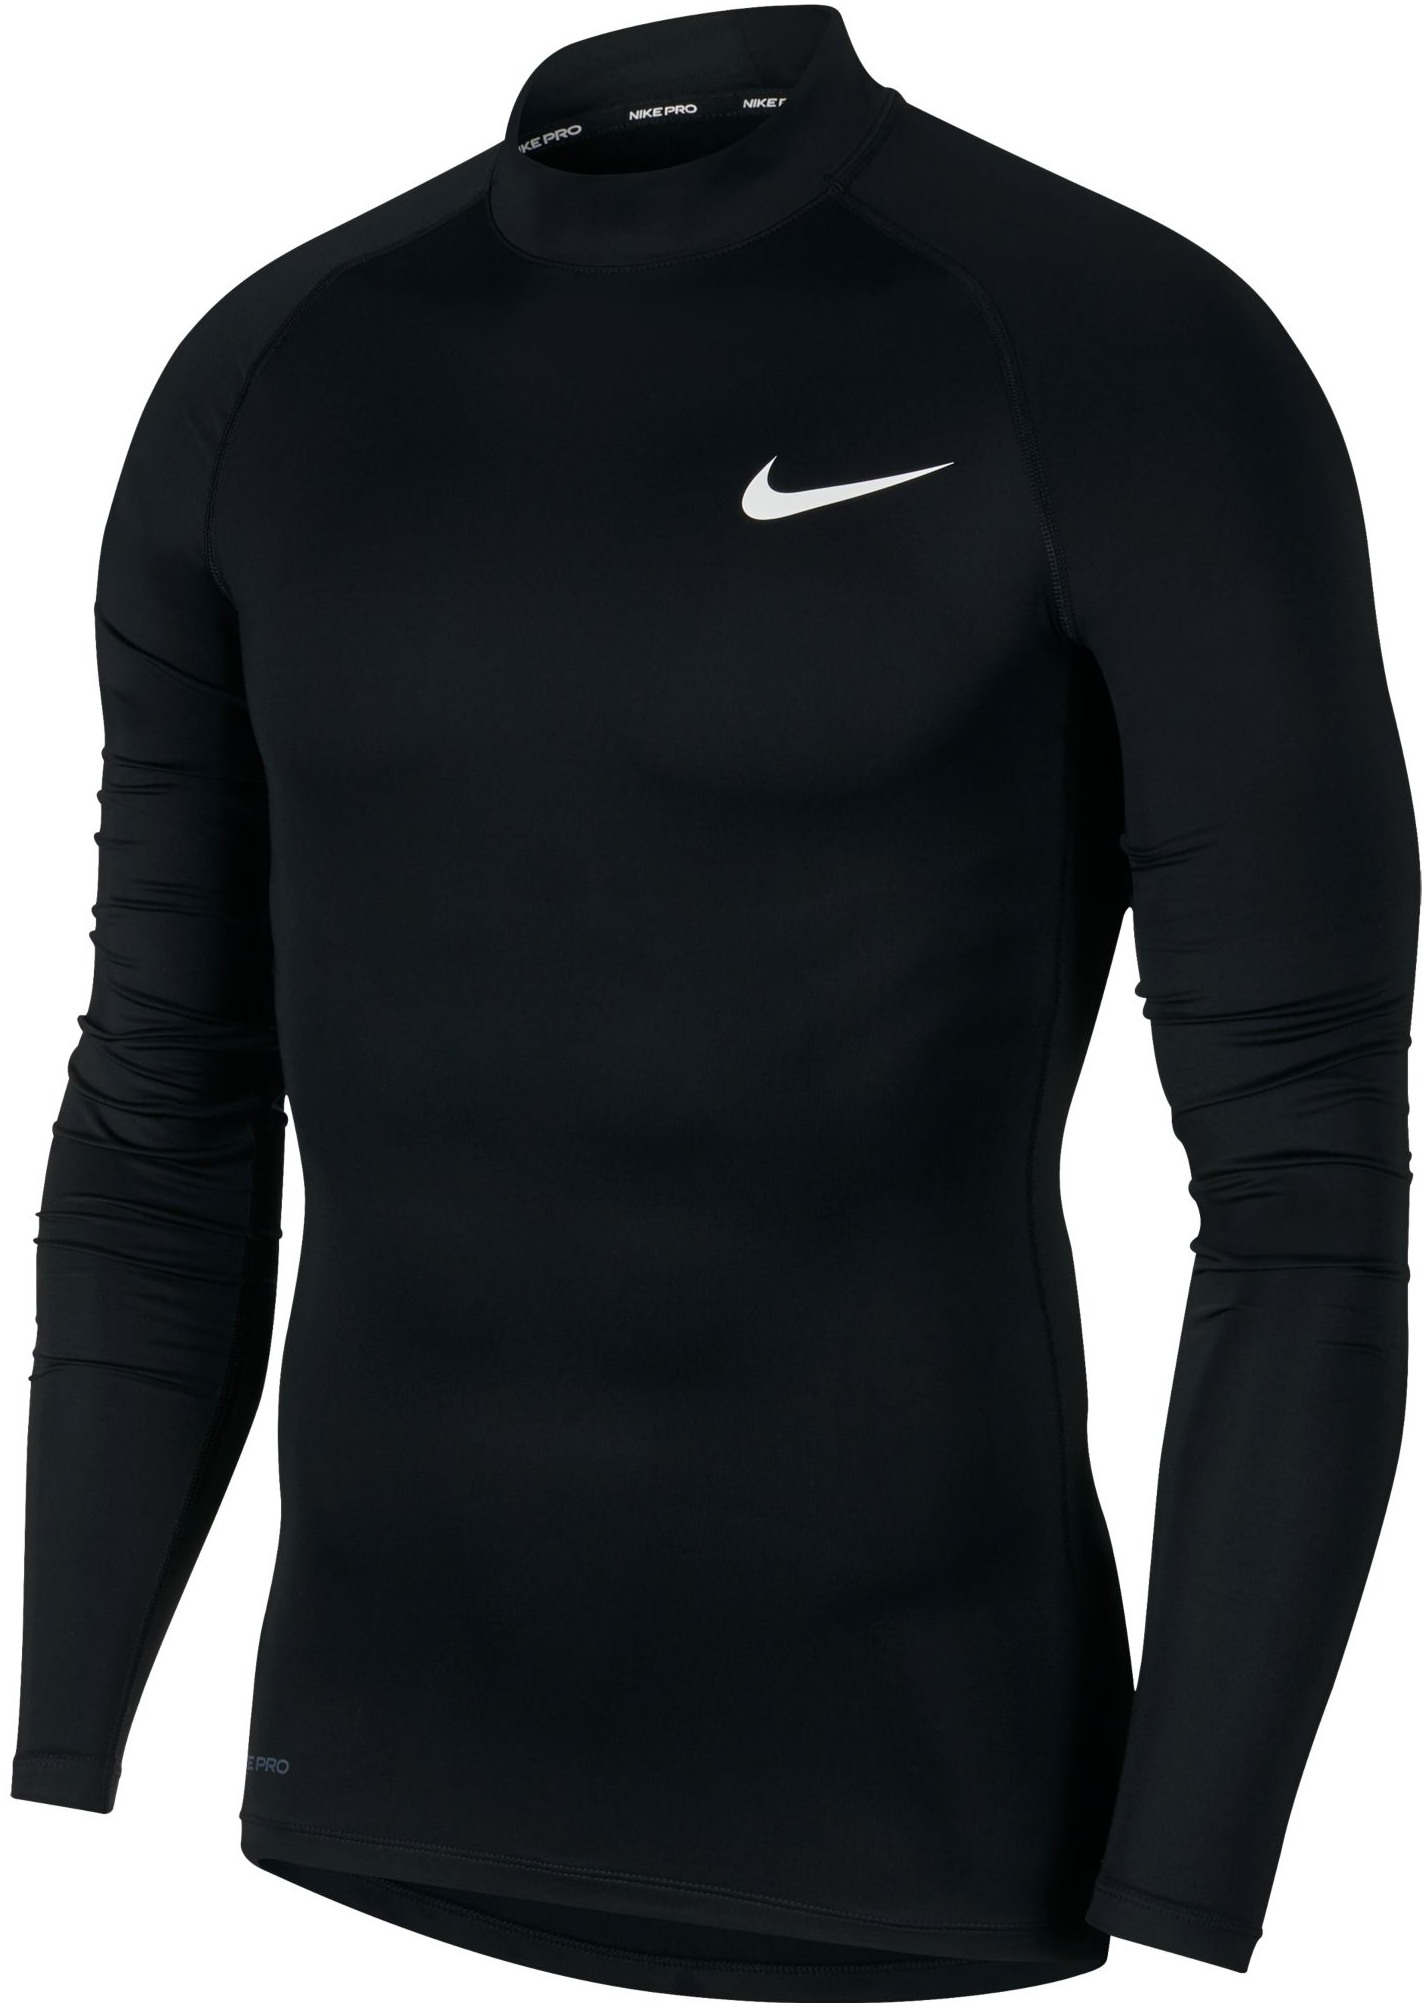 Mens compression long sleeve shirt Nike PRO black | AD Sport.store